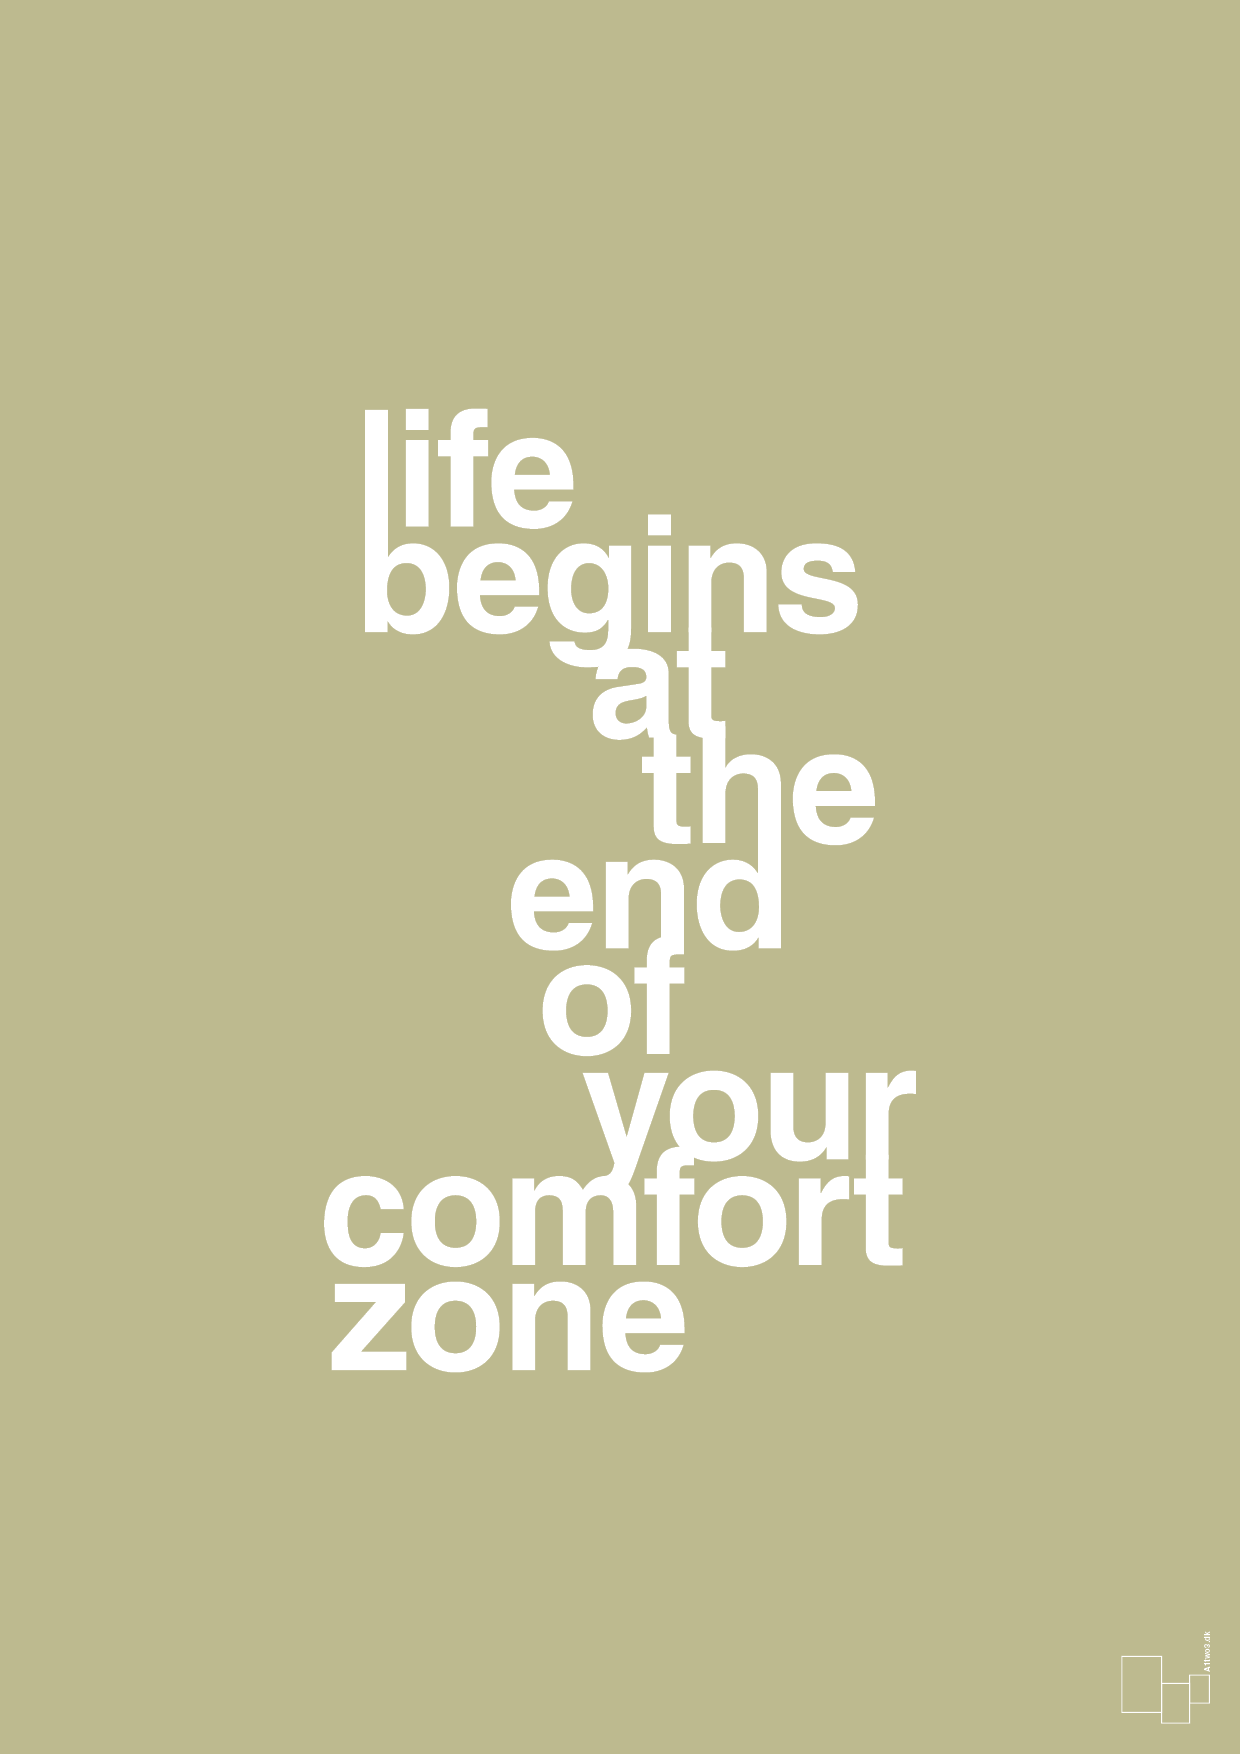 life begins at the end of your comfort zone - Plakat med Ordsprog i Back to Nature